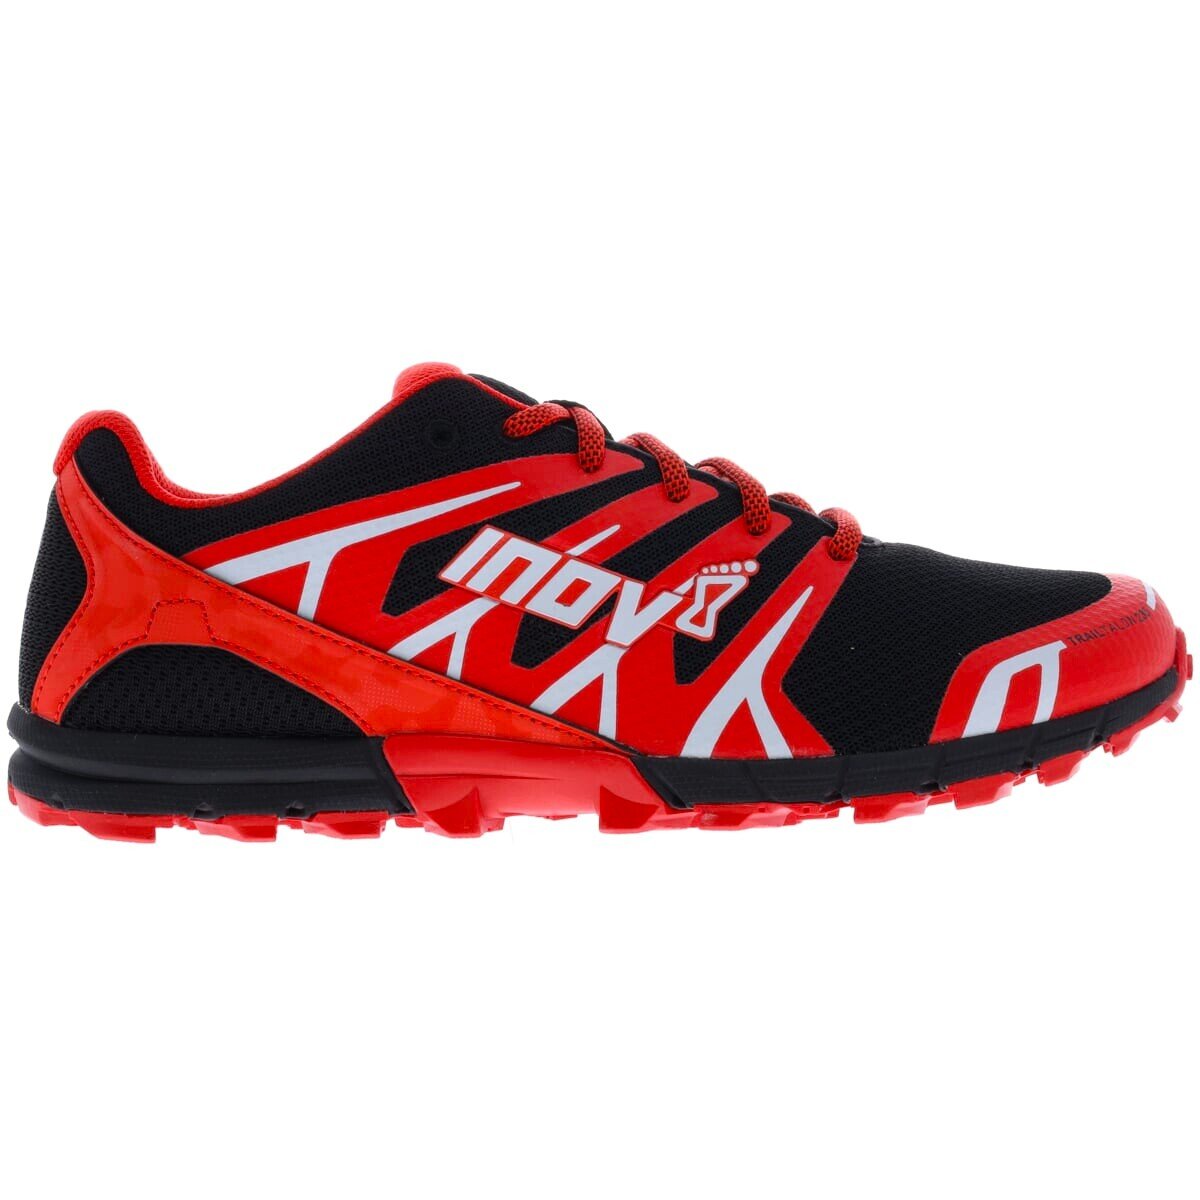 Inov-8 Trail Talon 235(s) UK 10 Men's Running Shoes